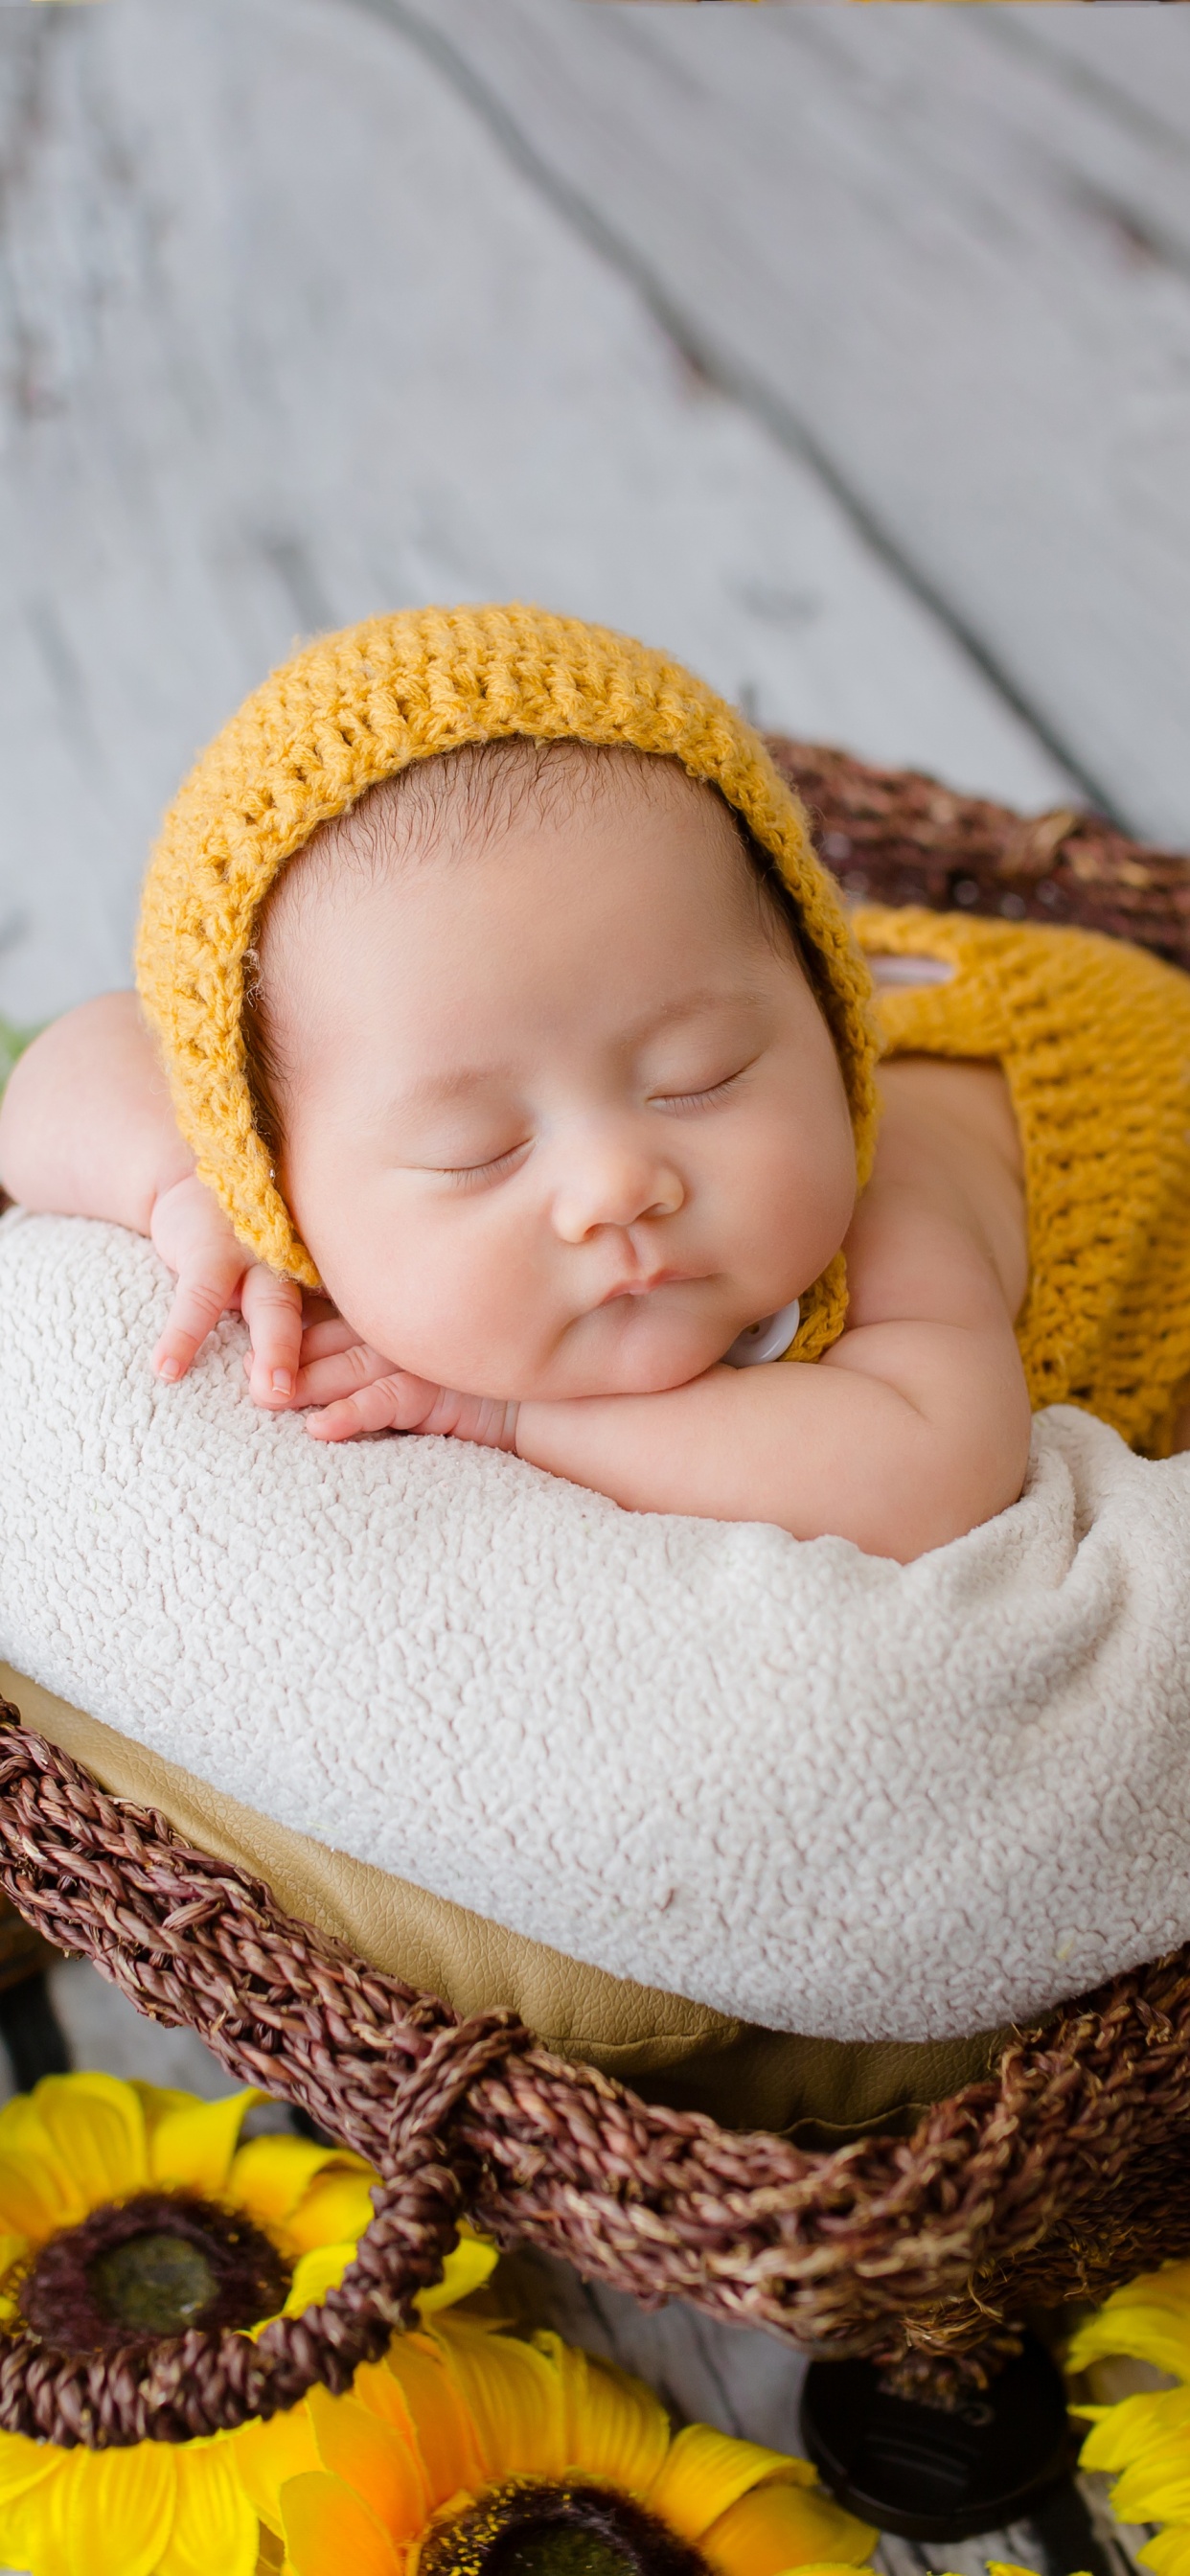 Baby in yellow dress photo – Free Girl Image on Unsplash